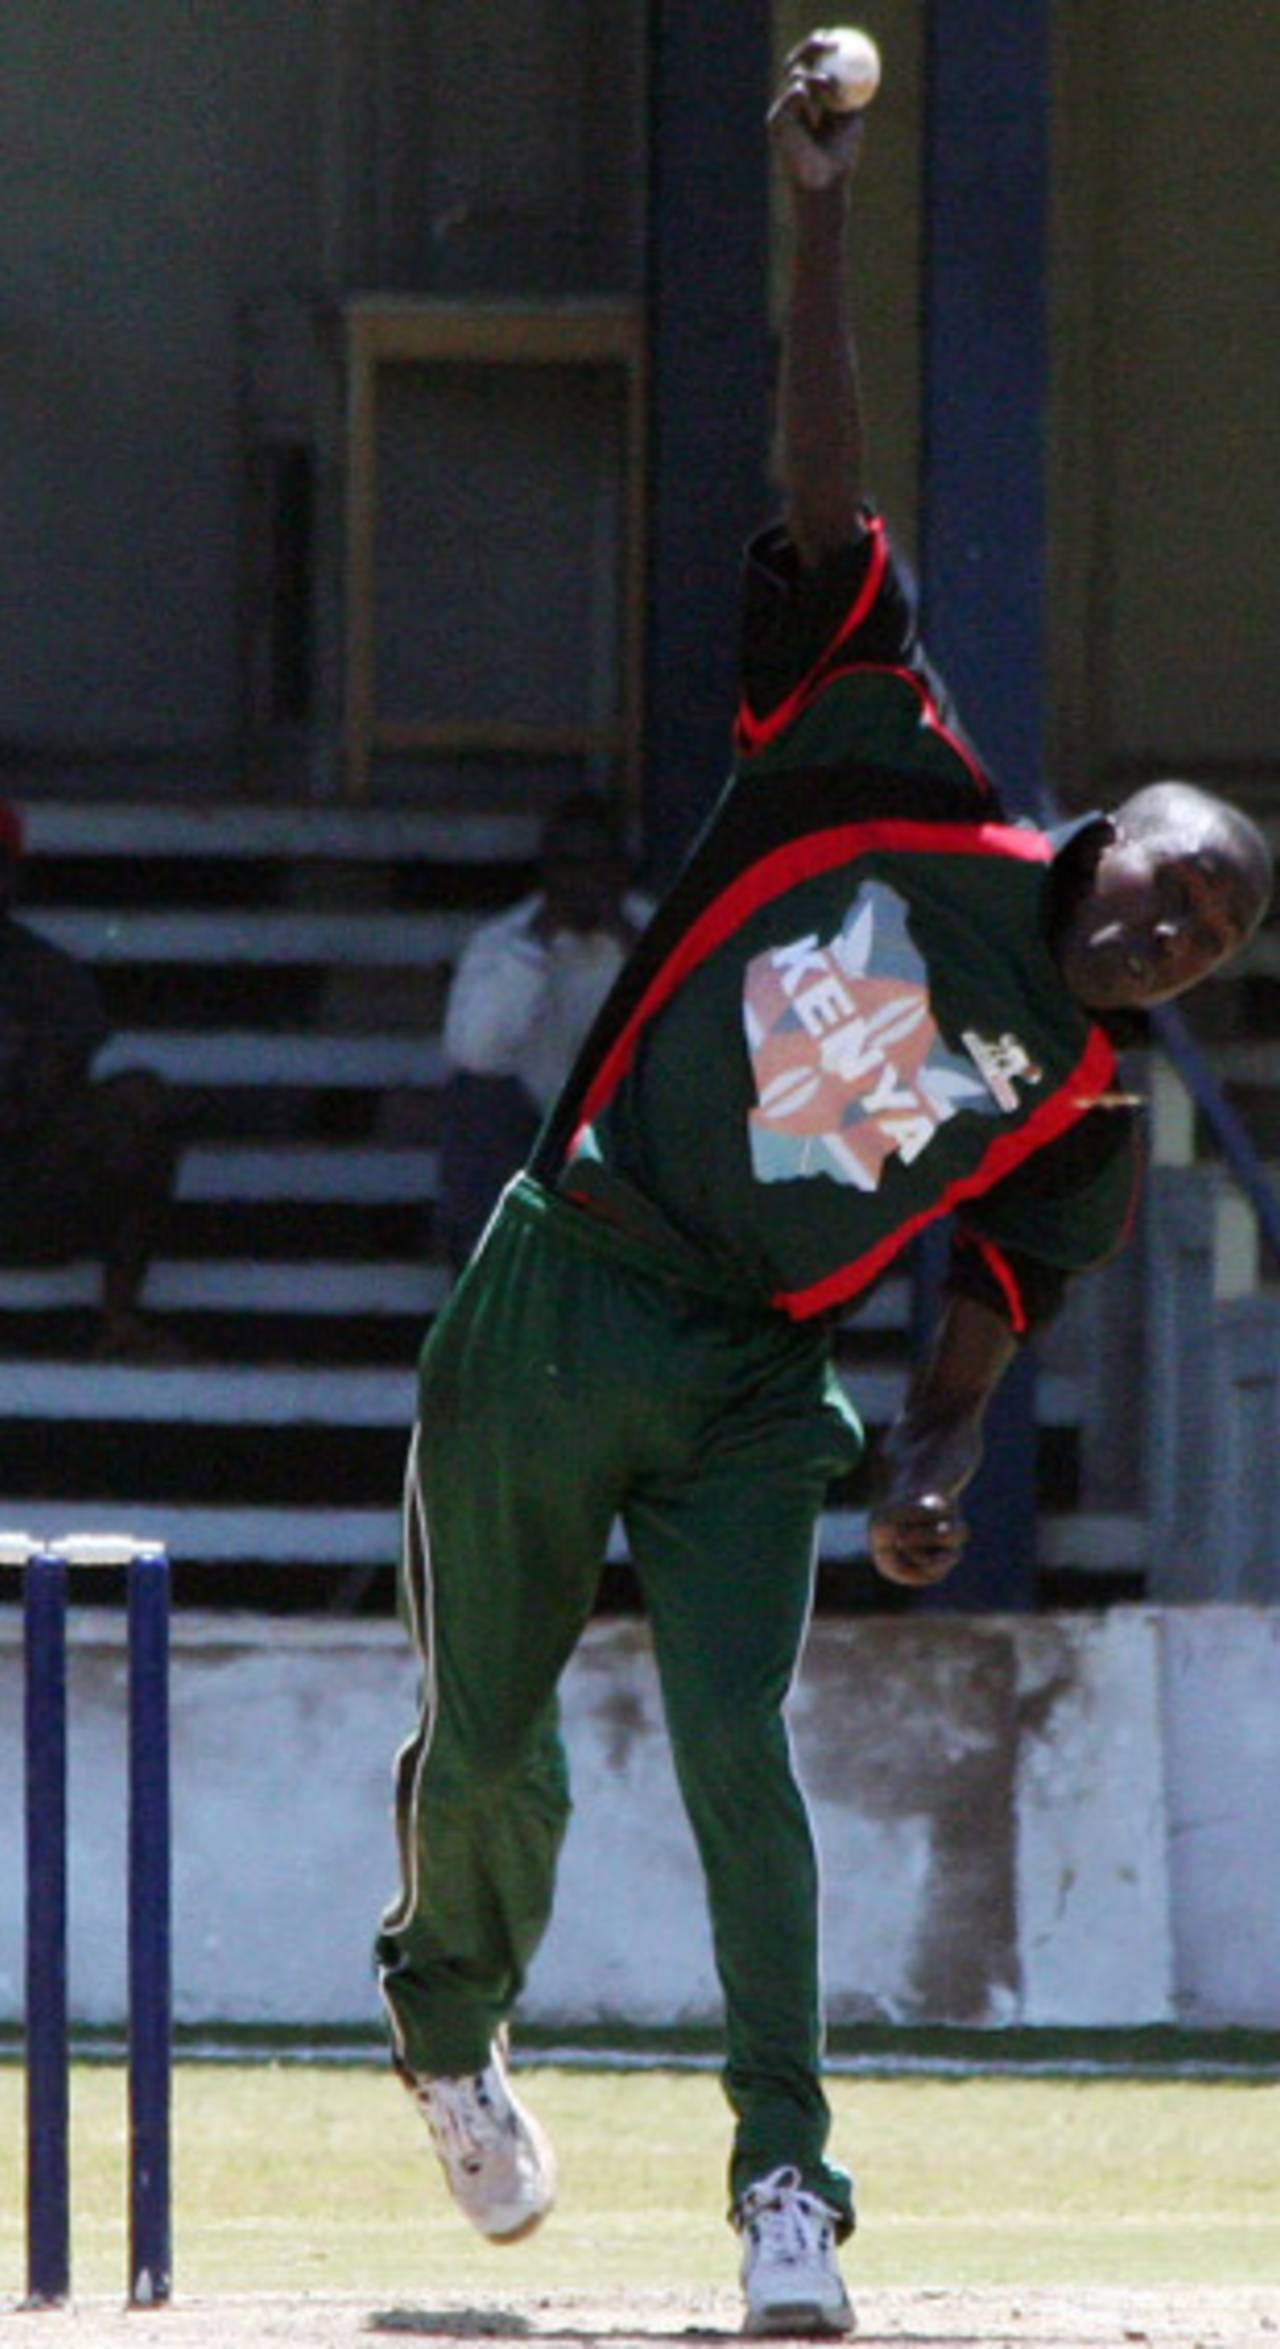 Jimmy Kamande bends his back, Kenya v Scotland, 3rd match, Kenya T20 Tri-Series, Nairobi, February 1, 2010